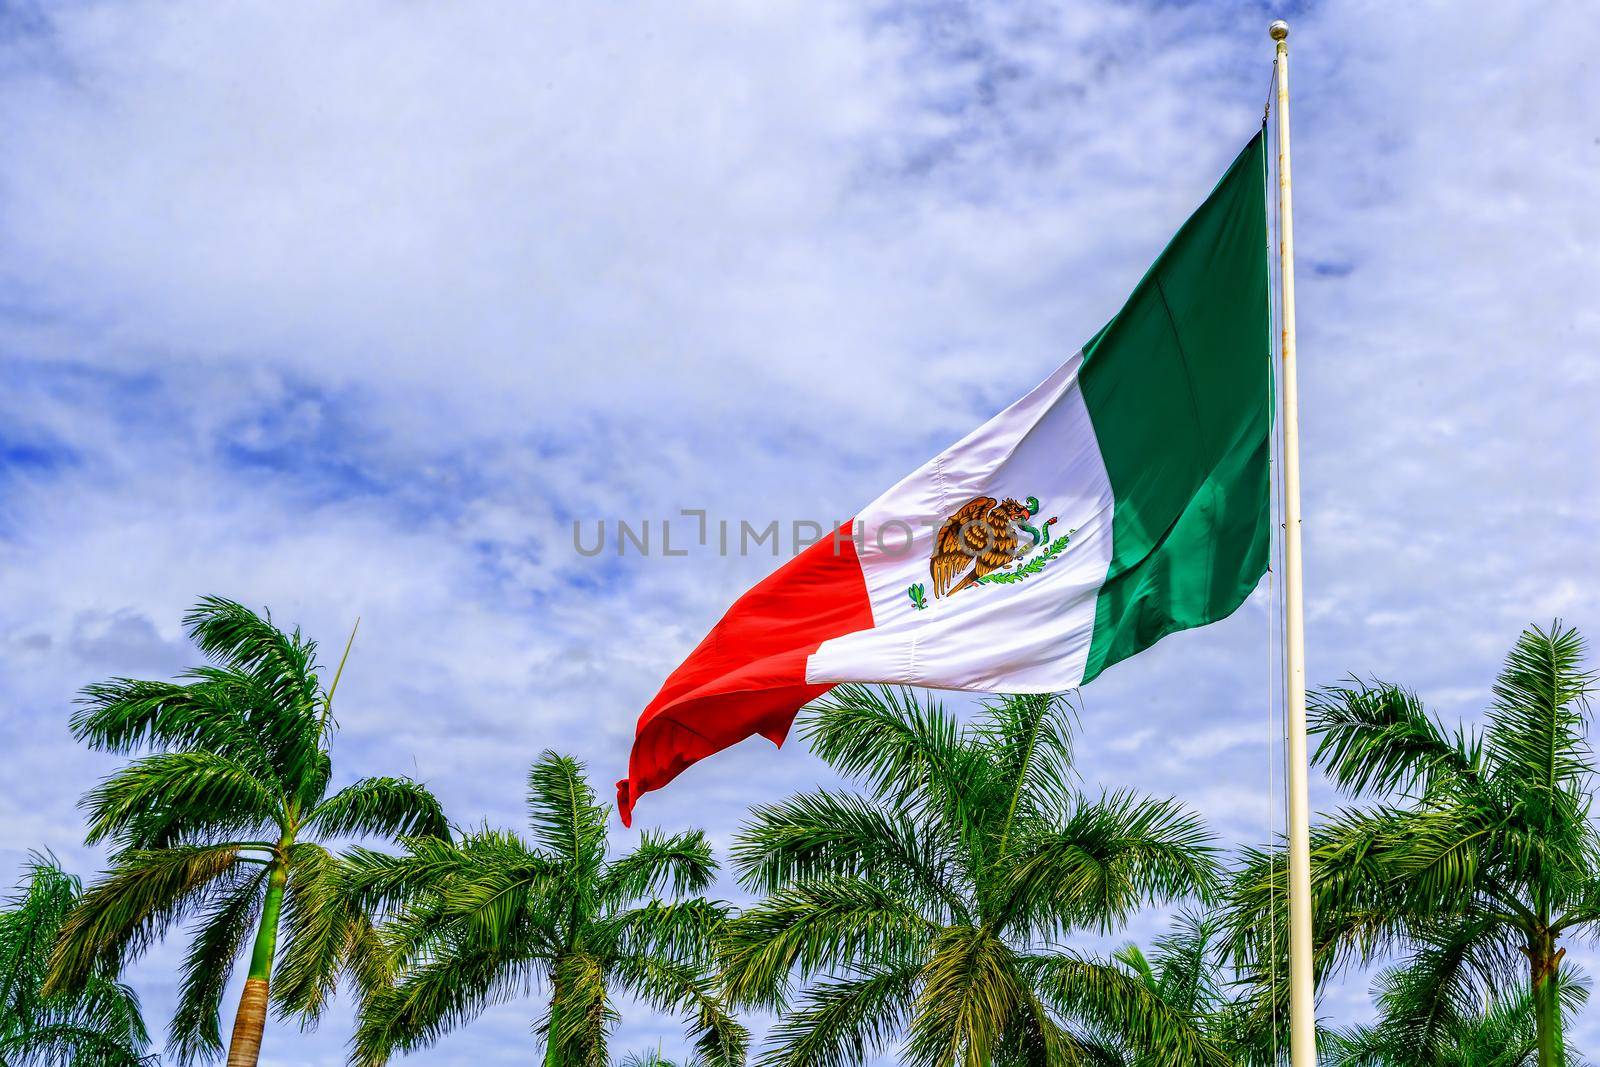 Against the backdrop of palm trees and blue sky Mexico flag. by kolesnikov_studio